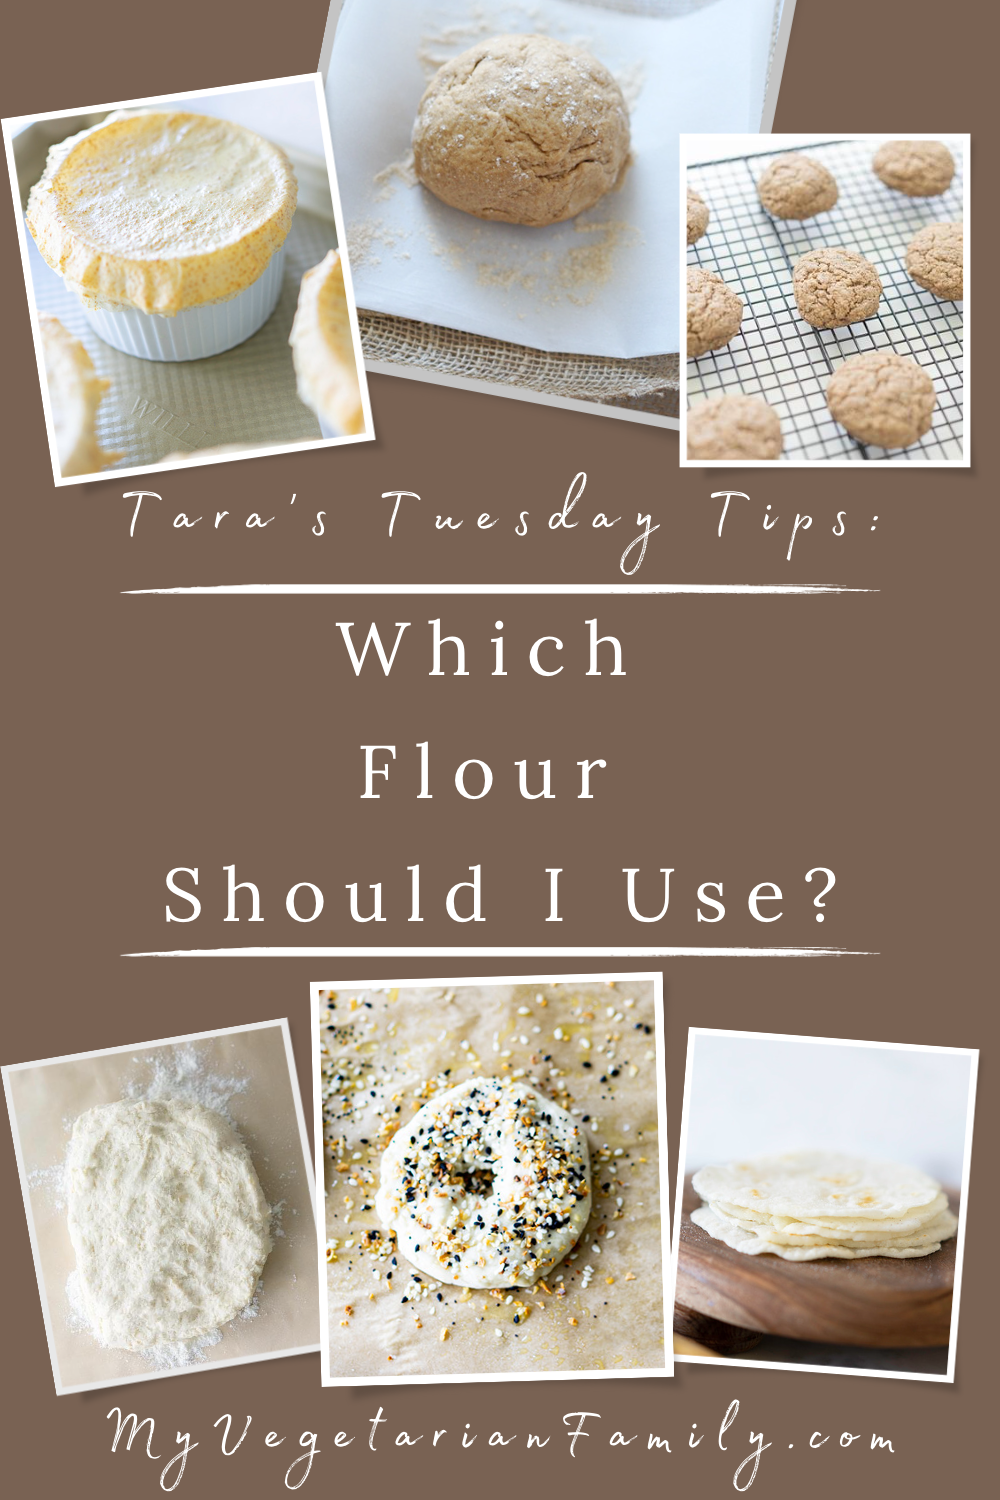 Which Flour Should I Use? | My Vegetarian Family | Tara's Tuesday Tips #nutritiontips #typesofflour